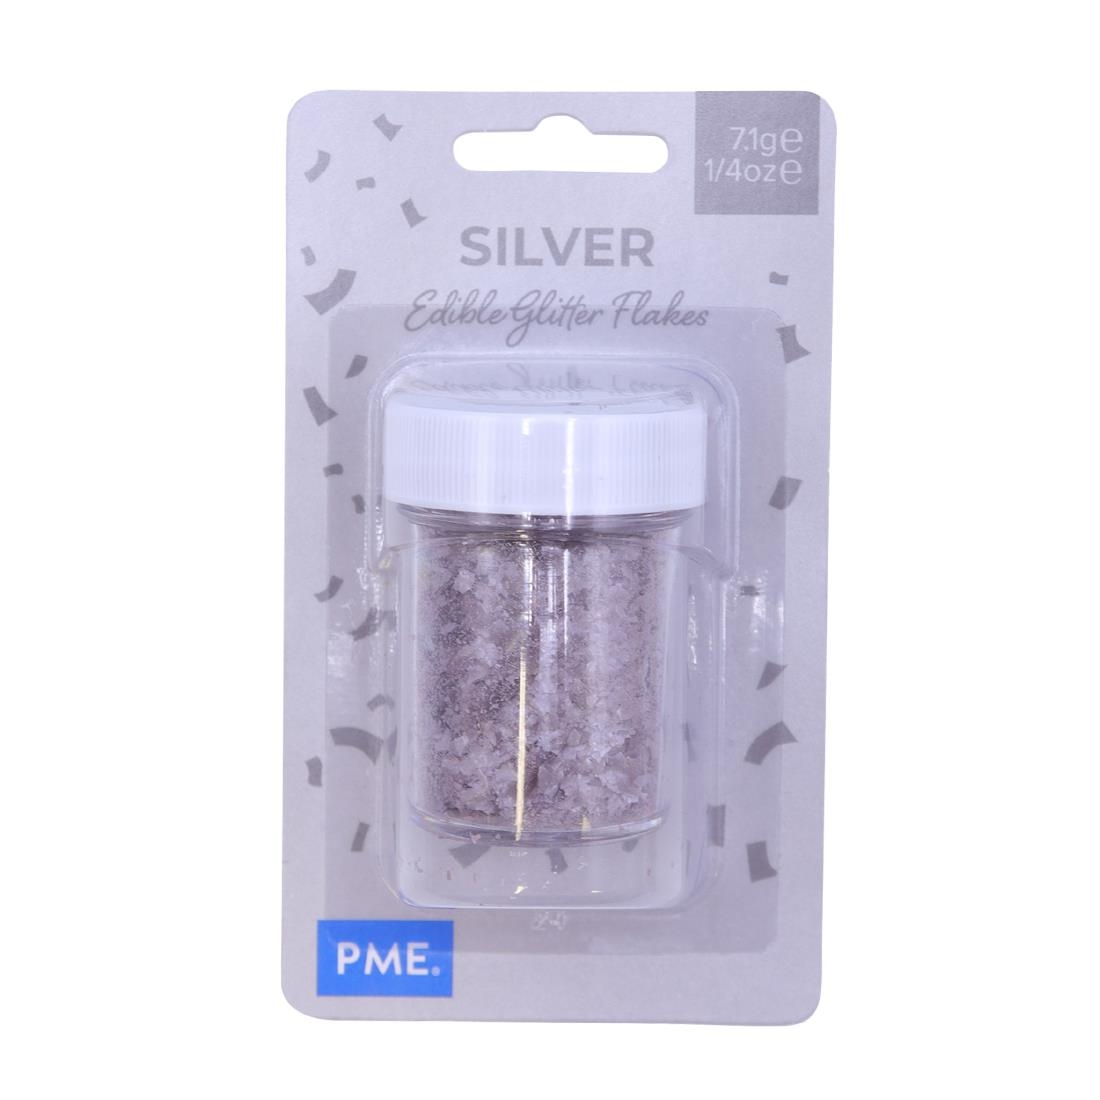 PME Glitter Flakes 7-1g - Silver (HU328)